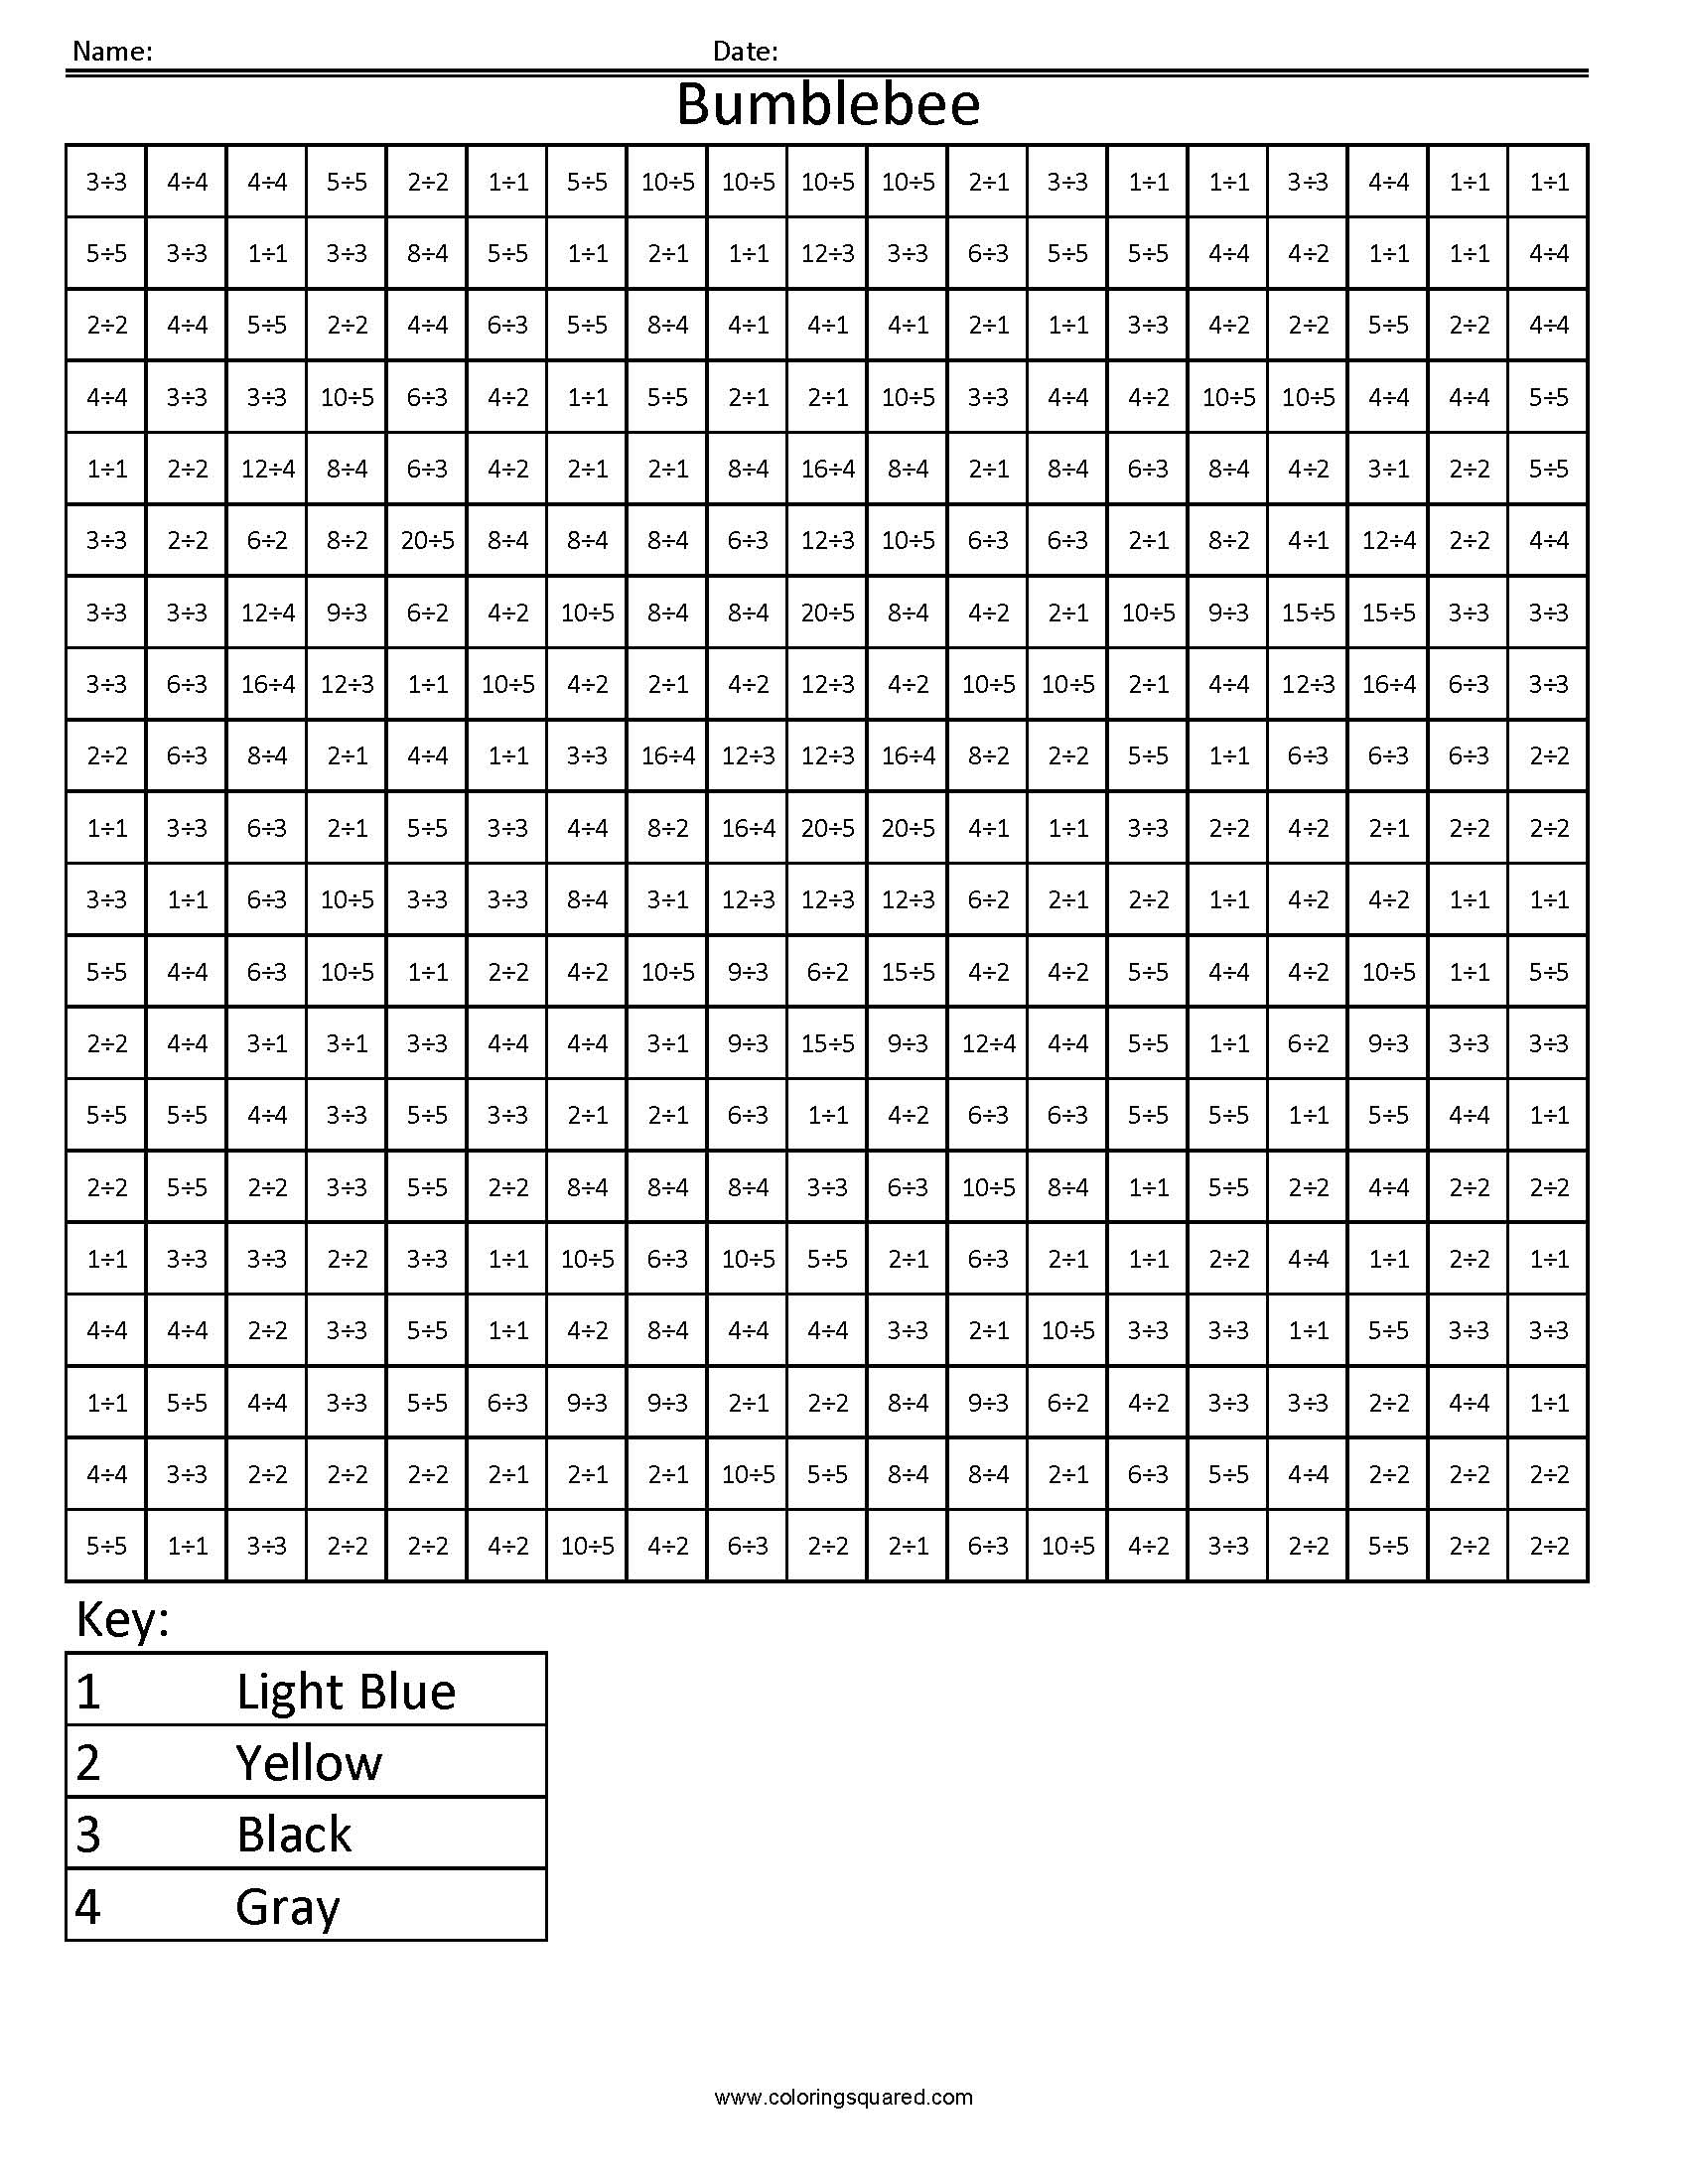 Coloring Squared Multiplication Worksheets Image